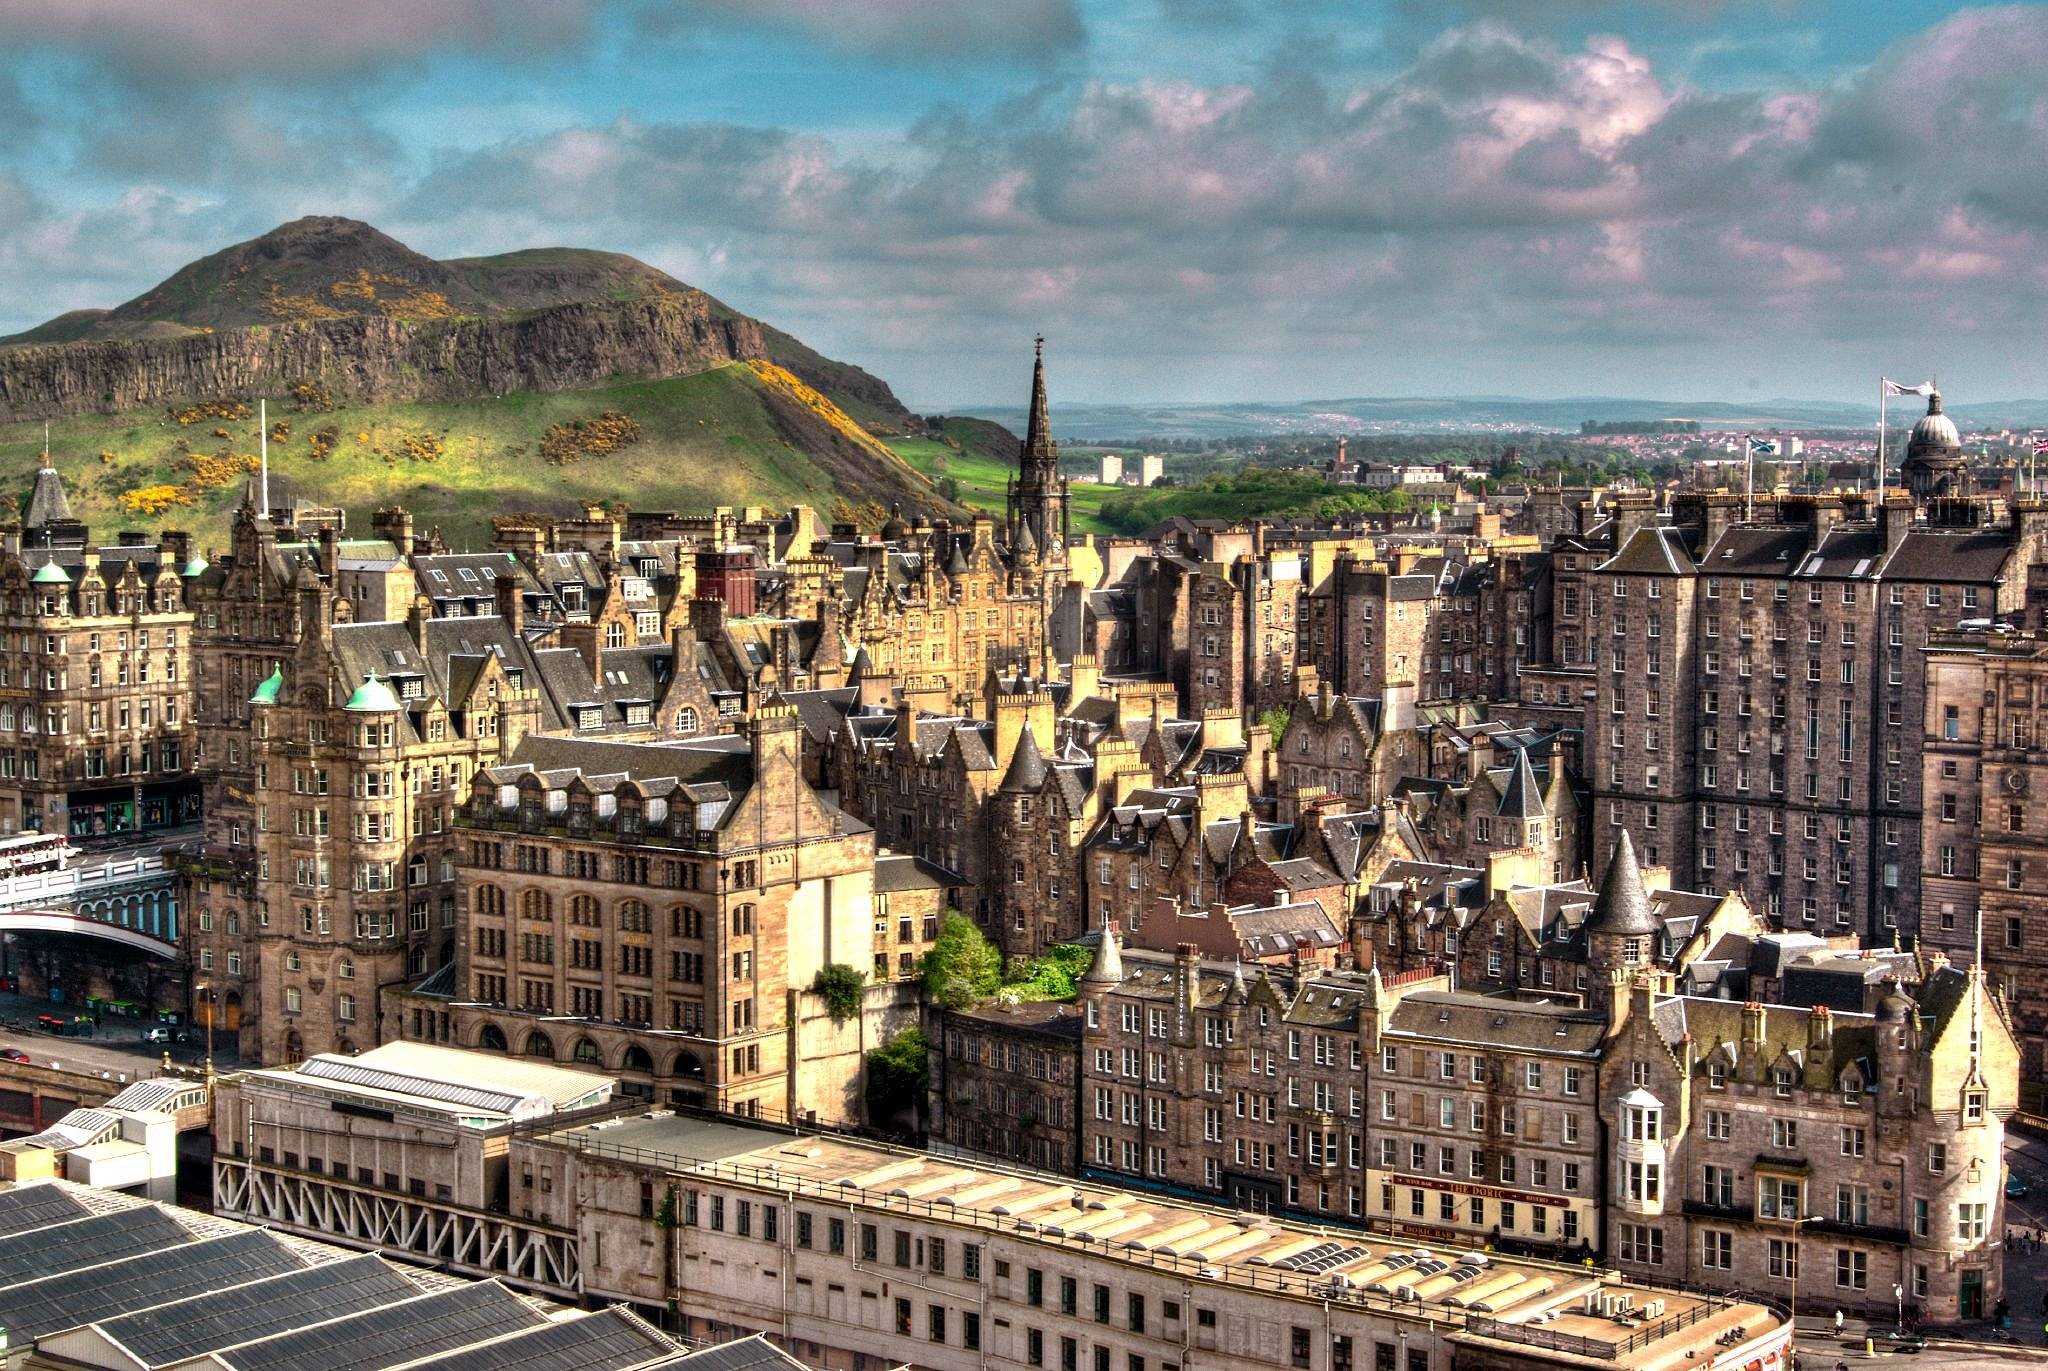 The Old Town, Edinburgh, Scotland